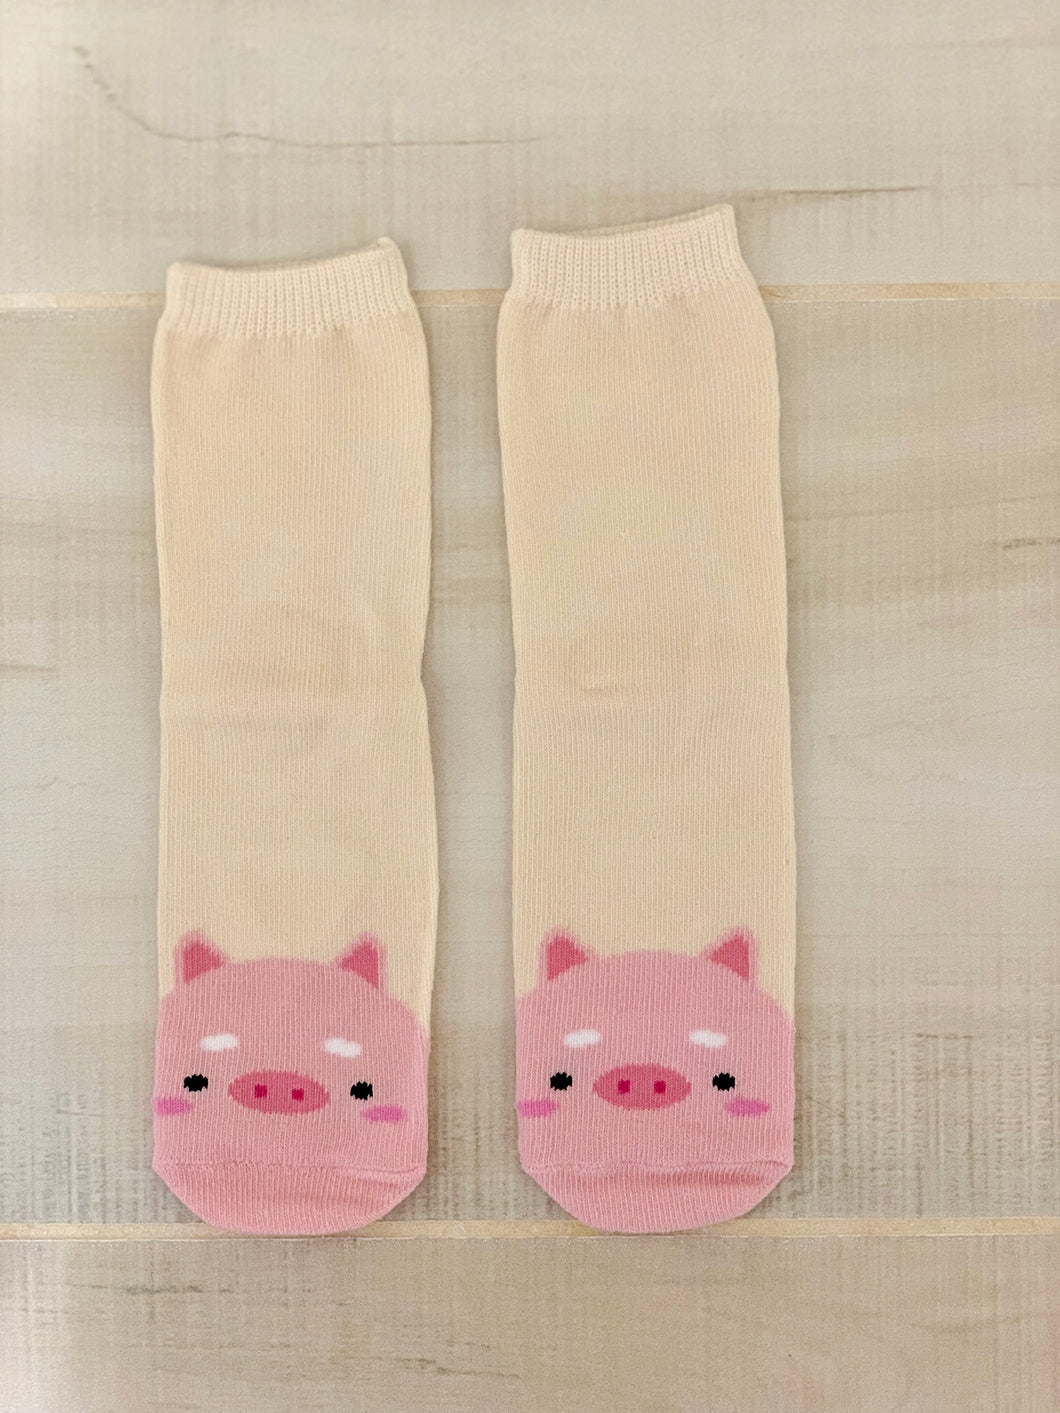 Pig Socks